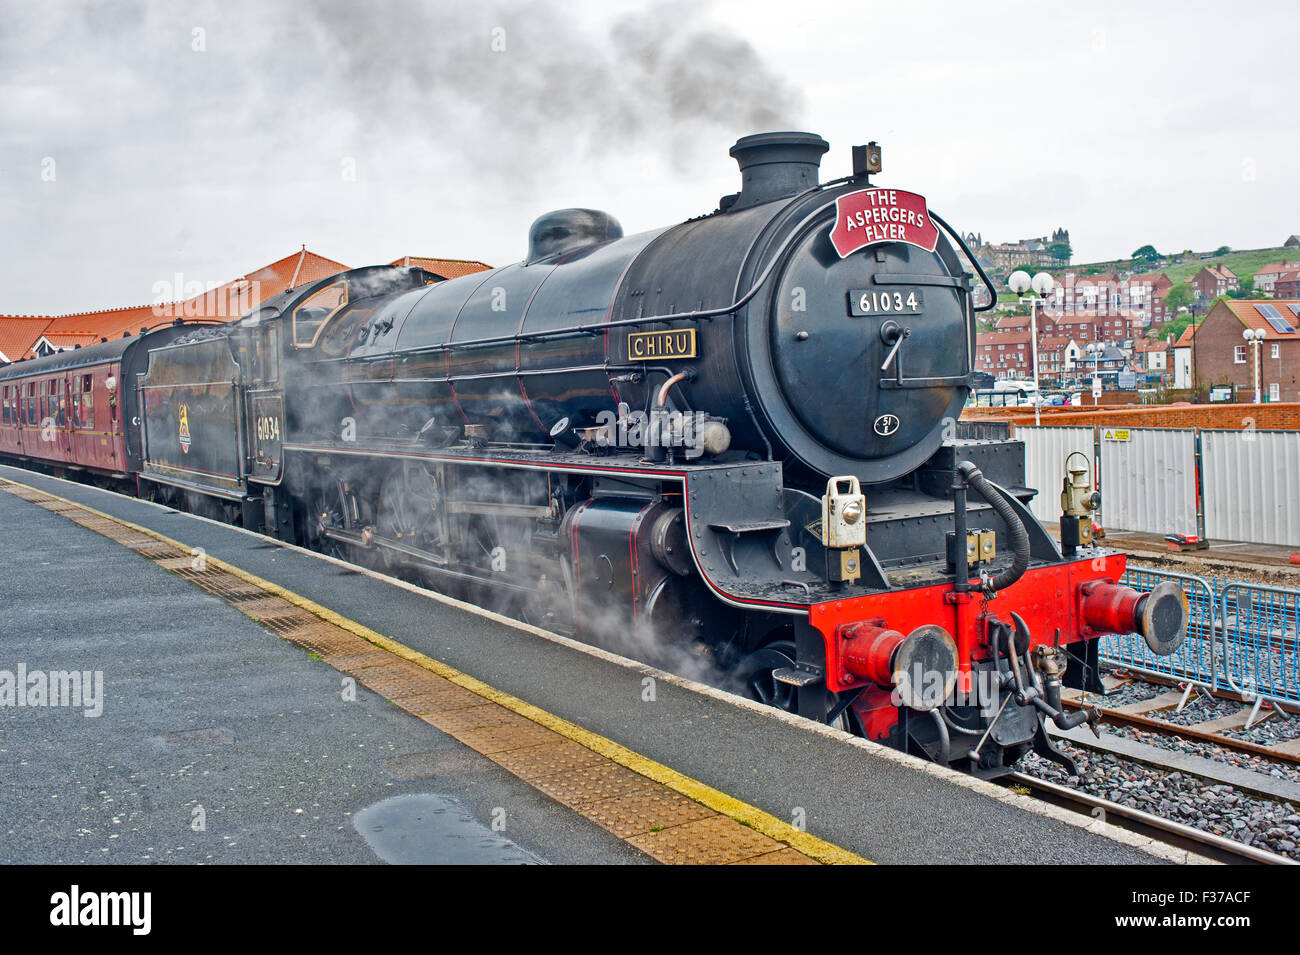 Tren de vapor en Whitby, Yorkshire del norte Foto de stock